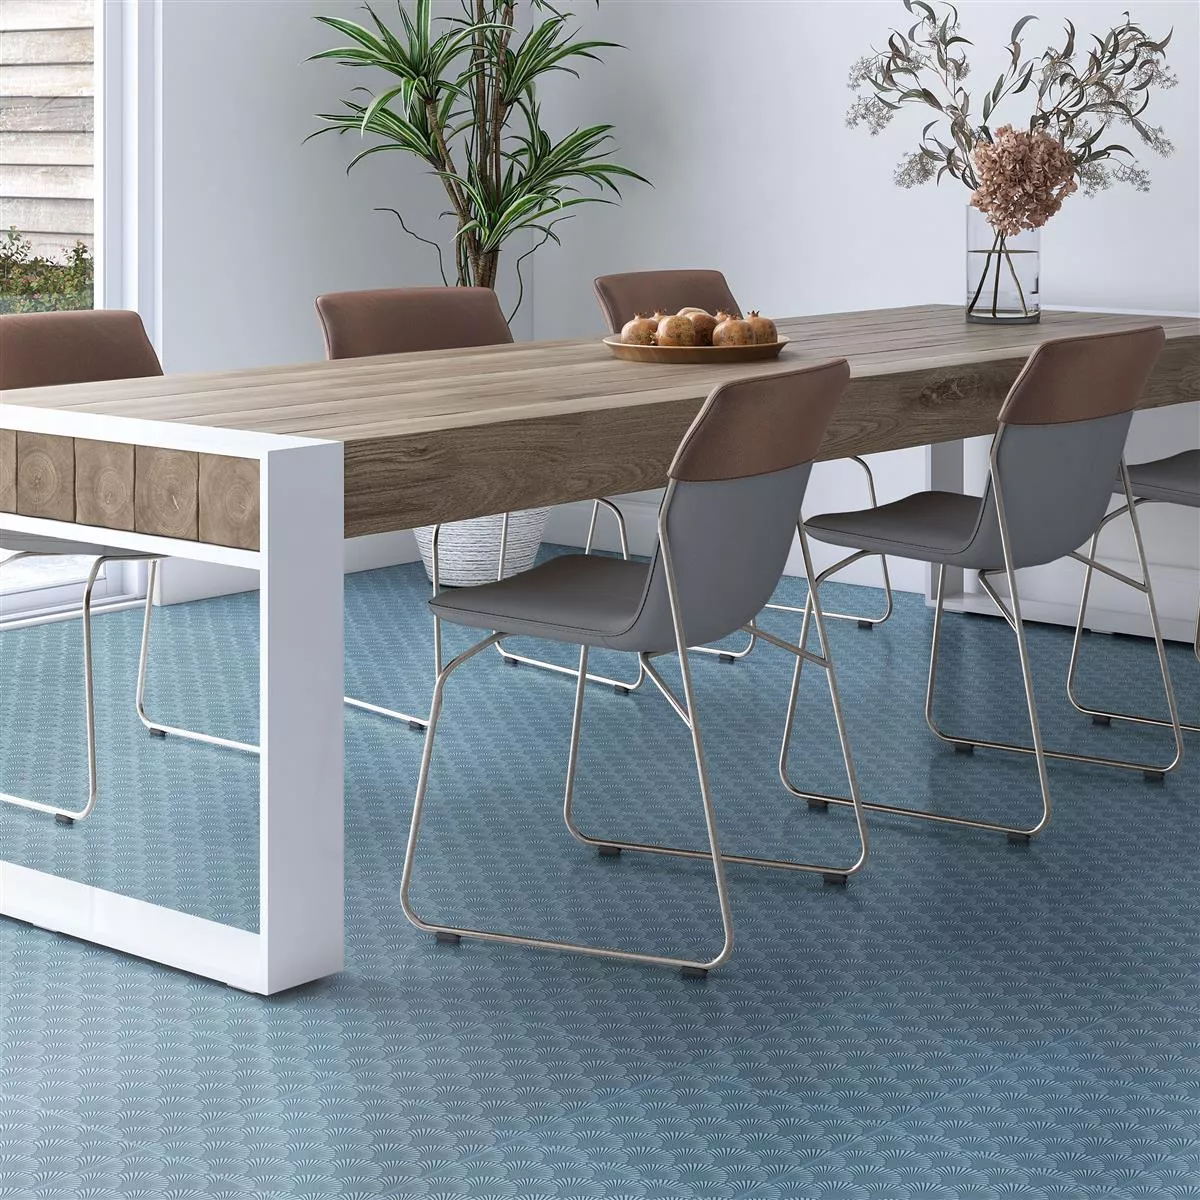 Floor Tiles Cement Optic Wildflower Blue Decor 18,5x18,5cm